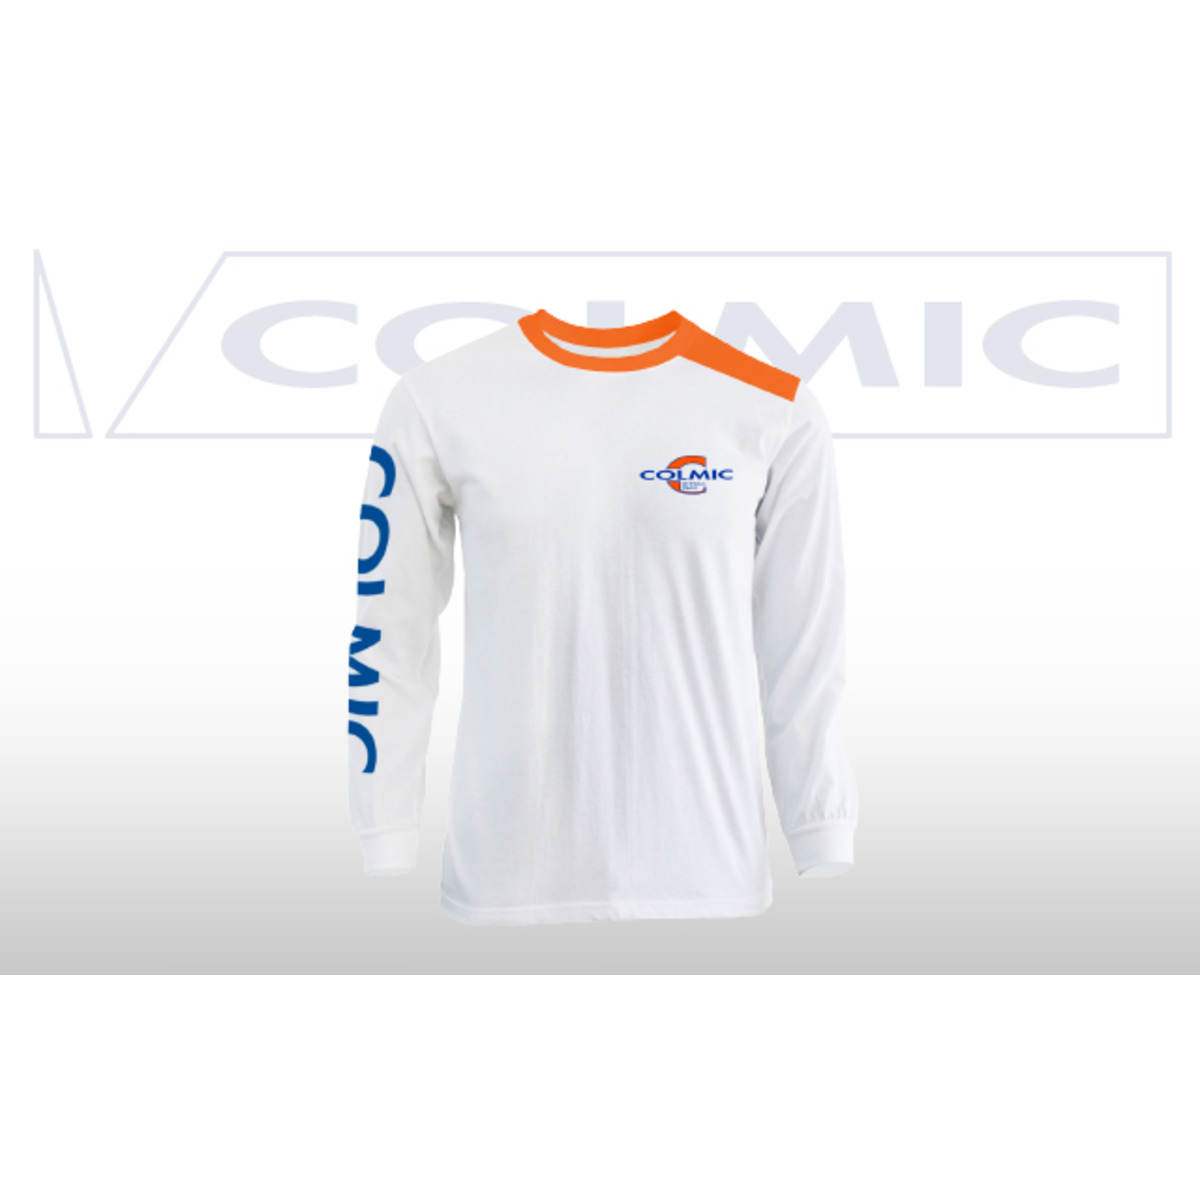 Colmic T-shirt Long Sleeves White-orange - l